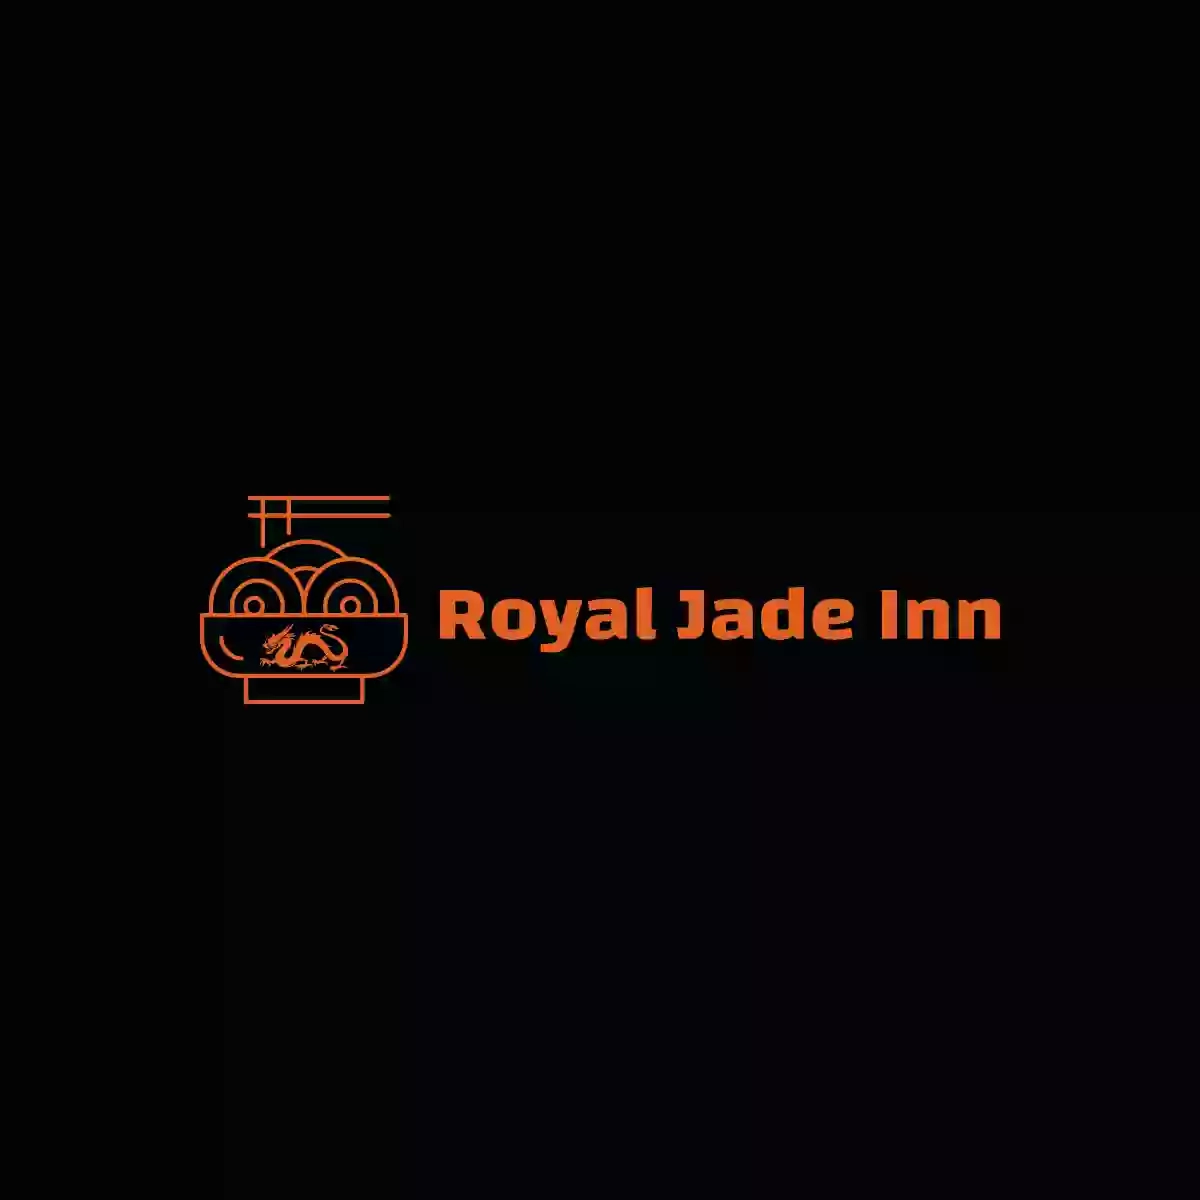 Royal Jade Inn